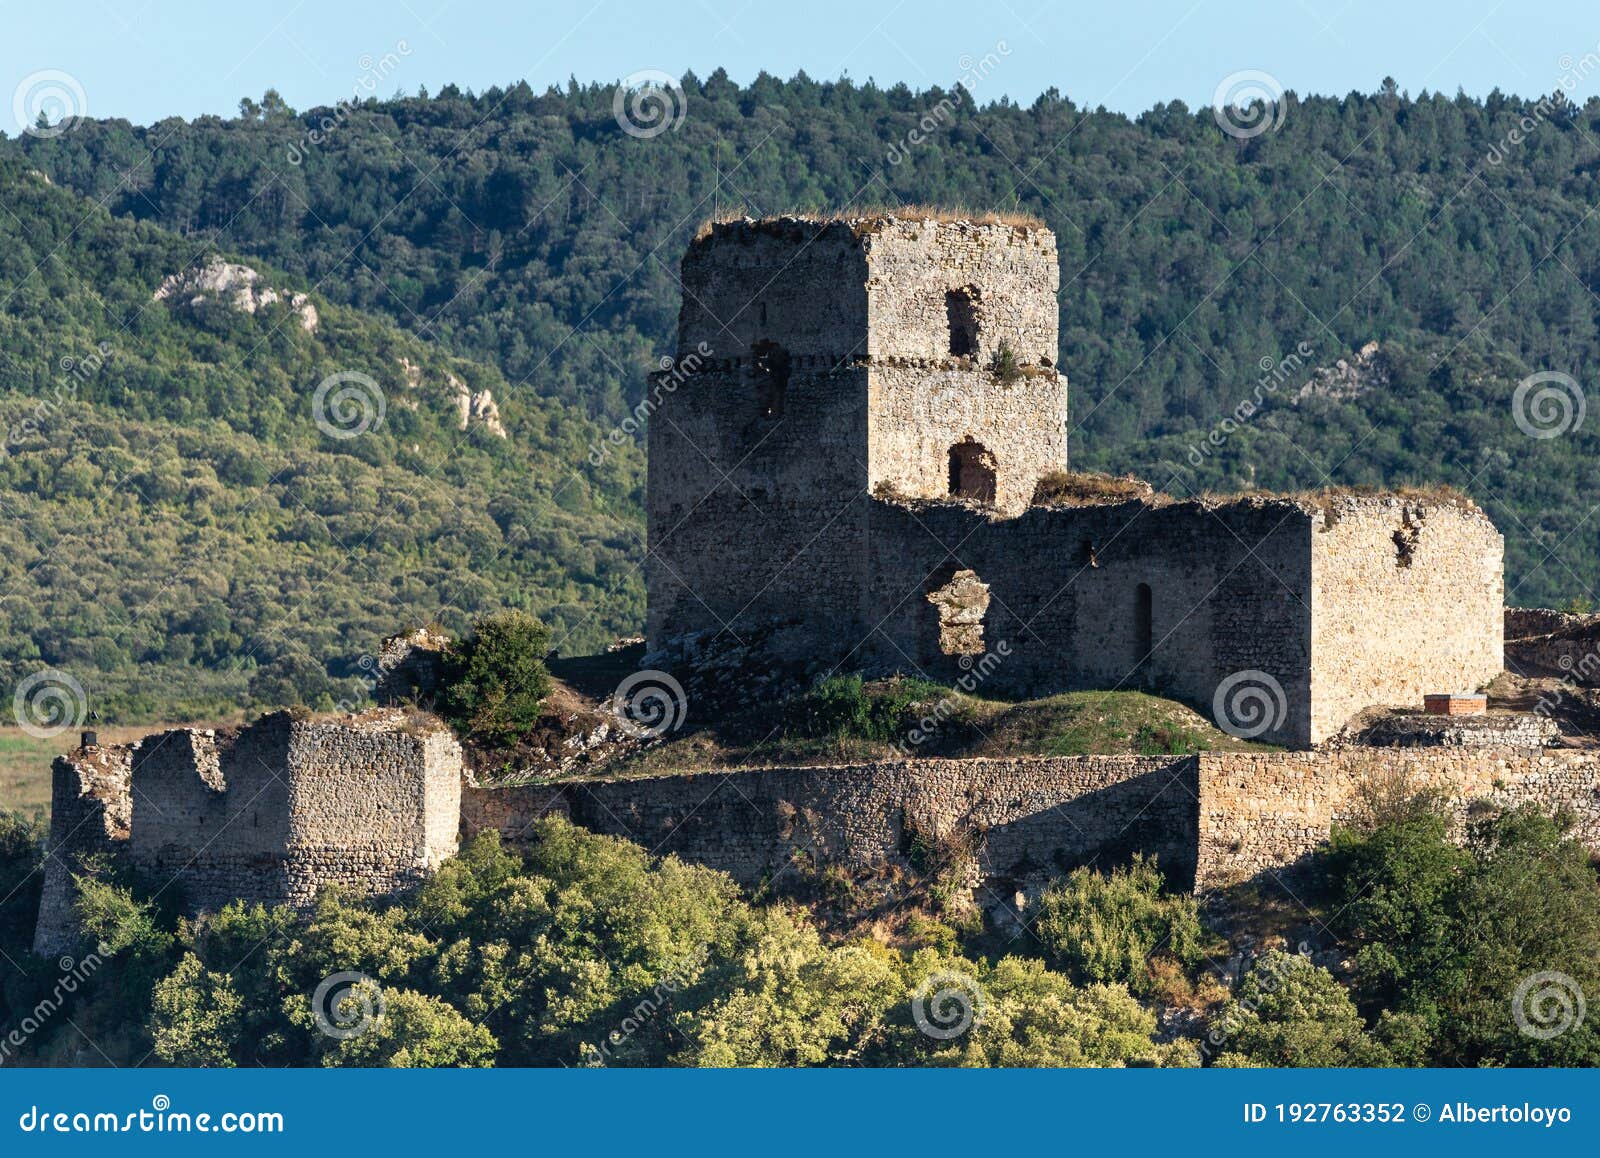 castle of ocio, alava in spain